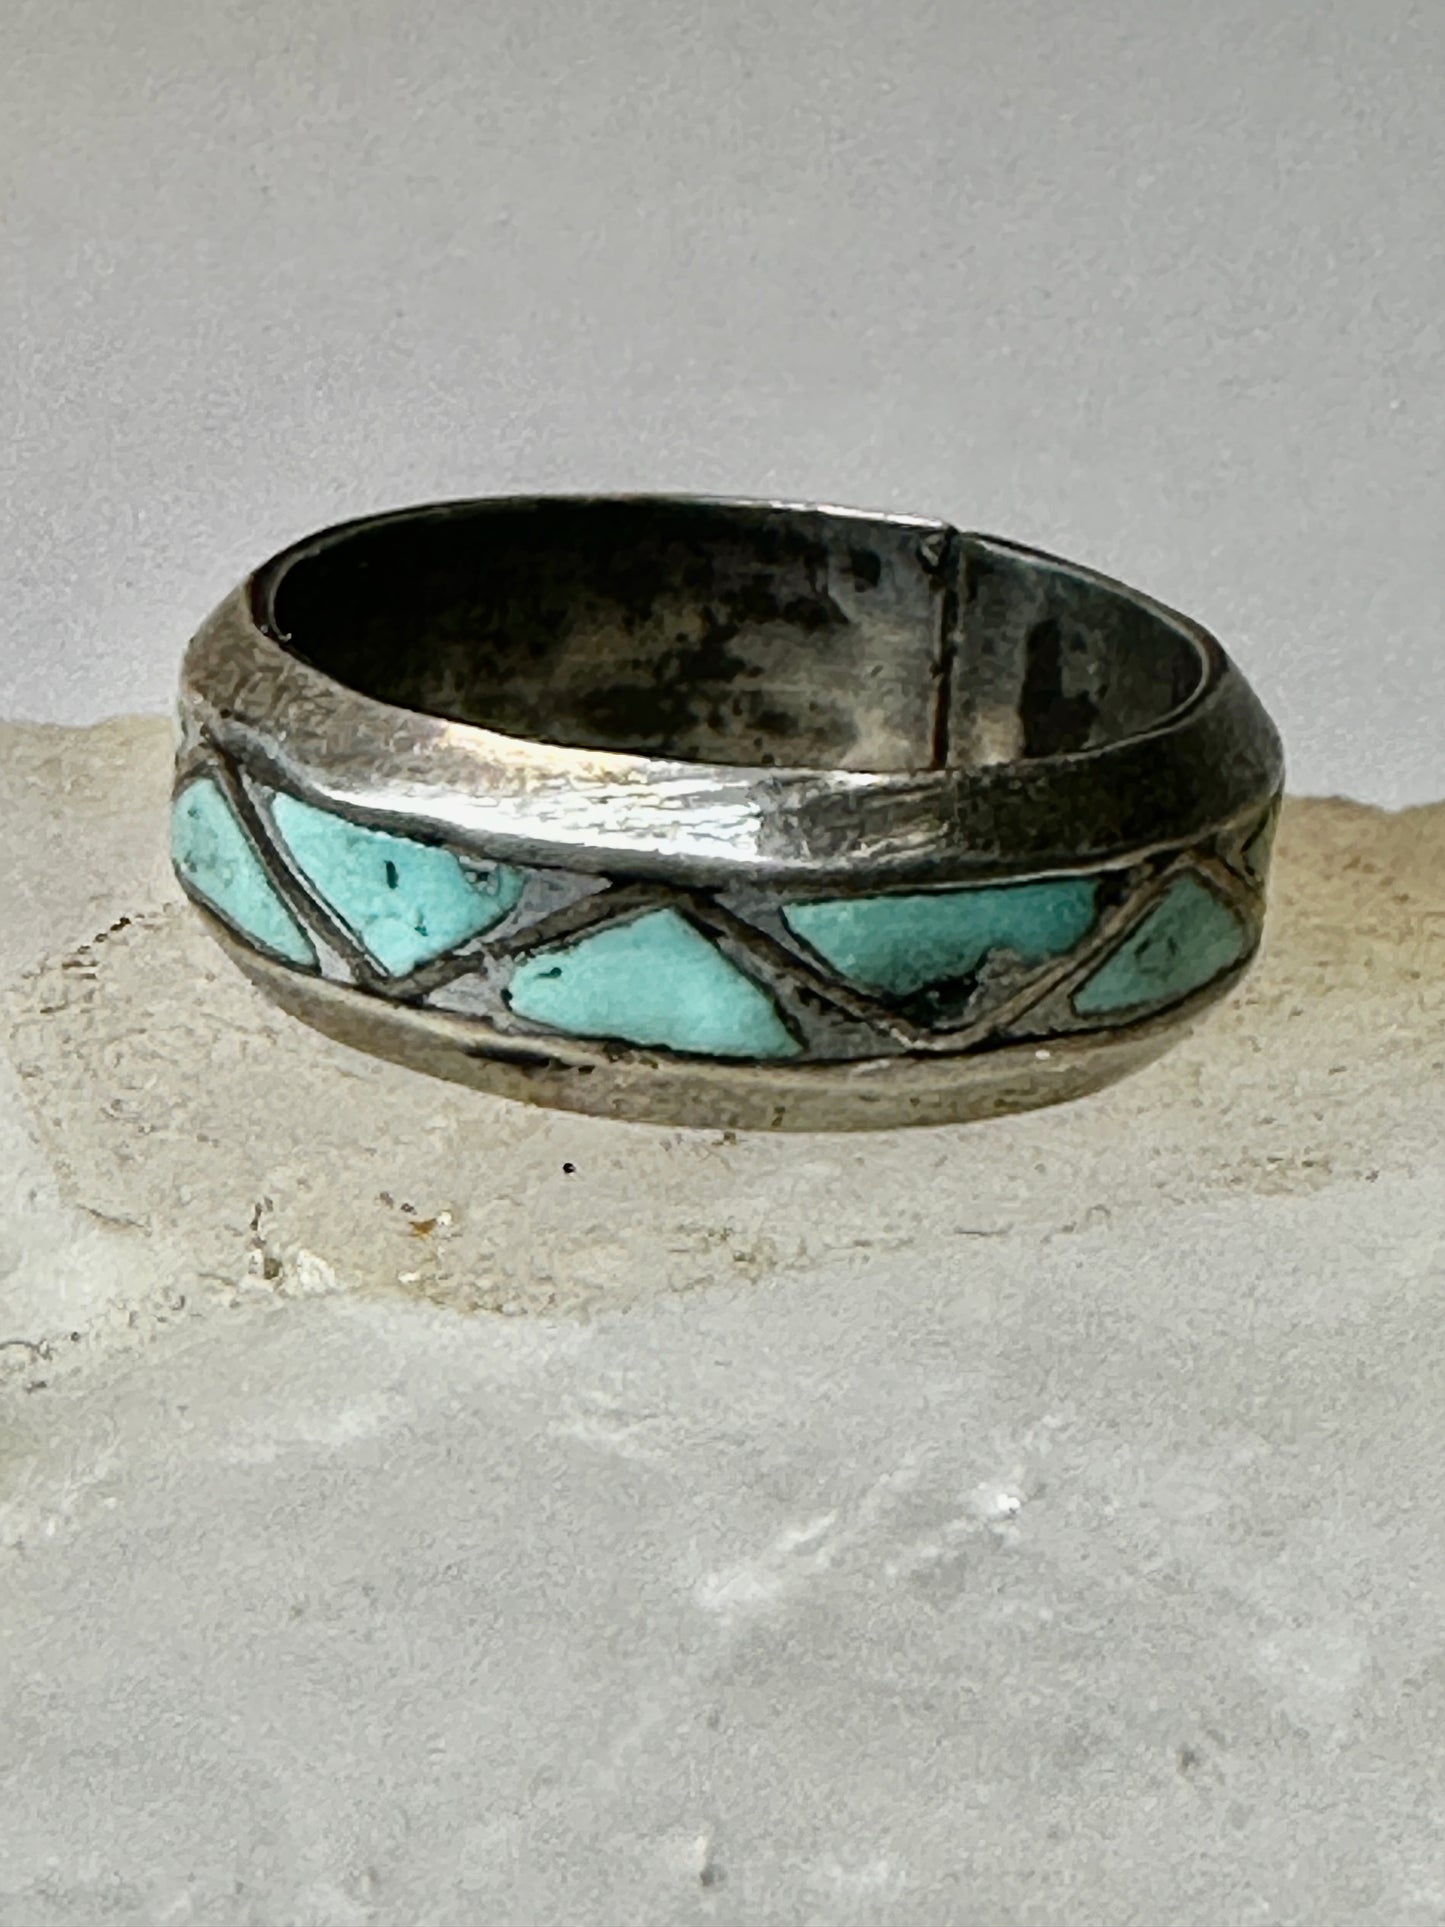 Zuni ring Turquoise wedding band size 6.25 sterling silver women men